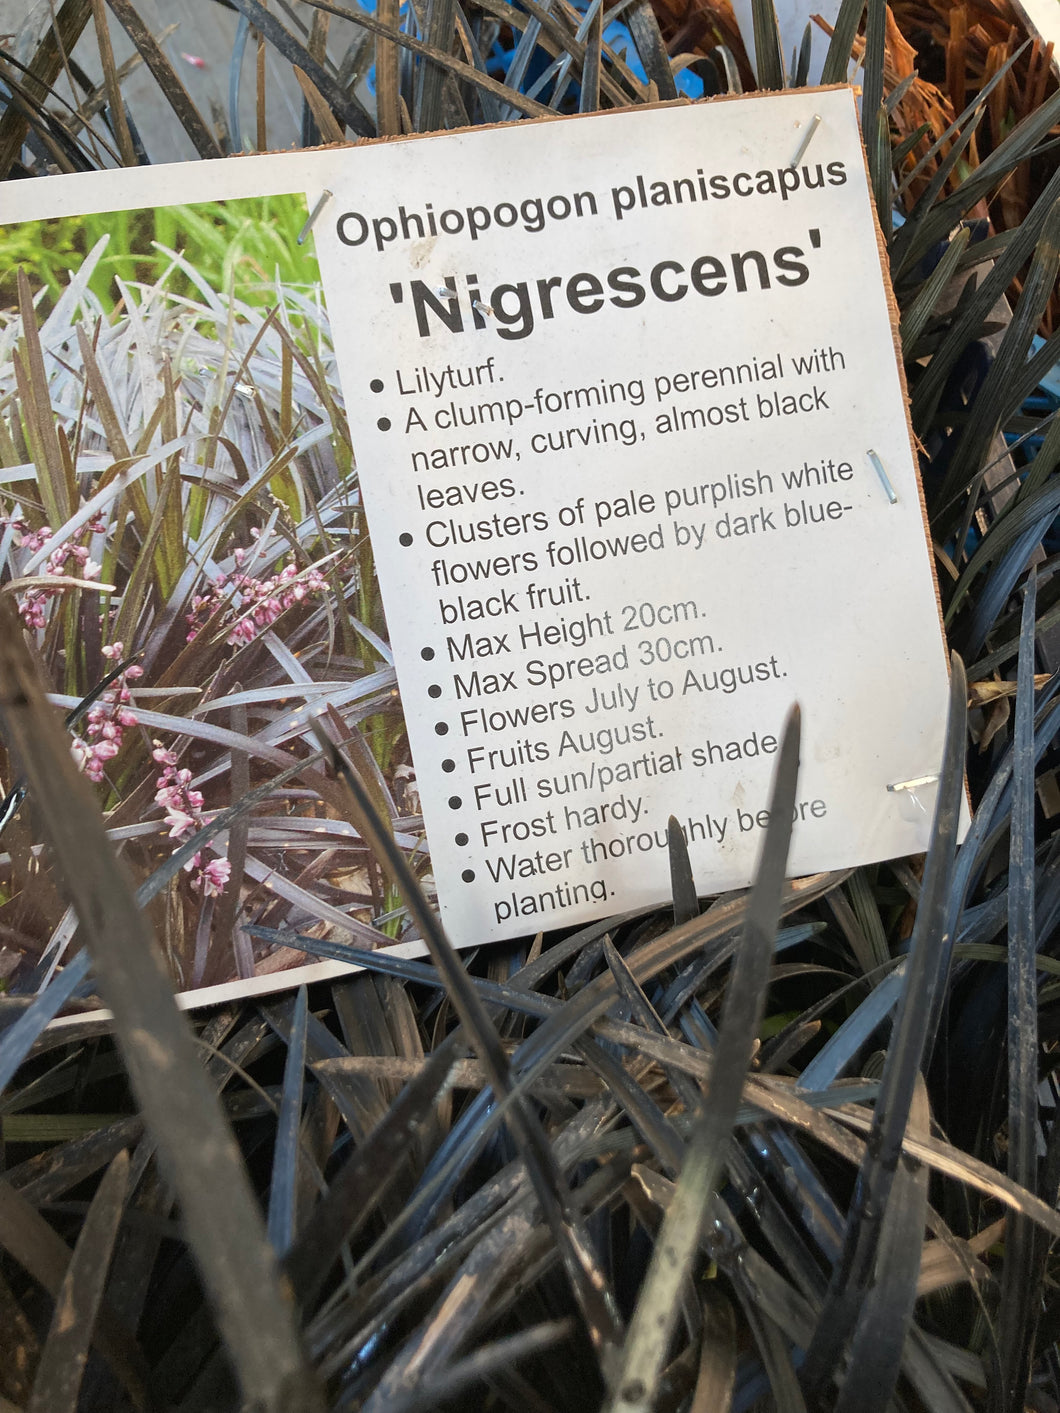 2 Bare Roots of Ophiopogon planiscapus (Nigrescens) Includes Postage